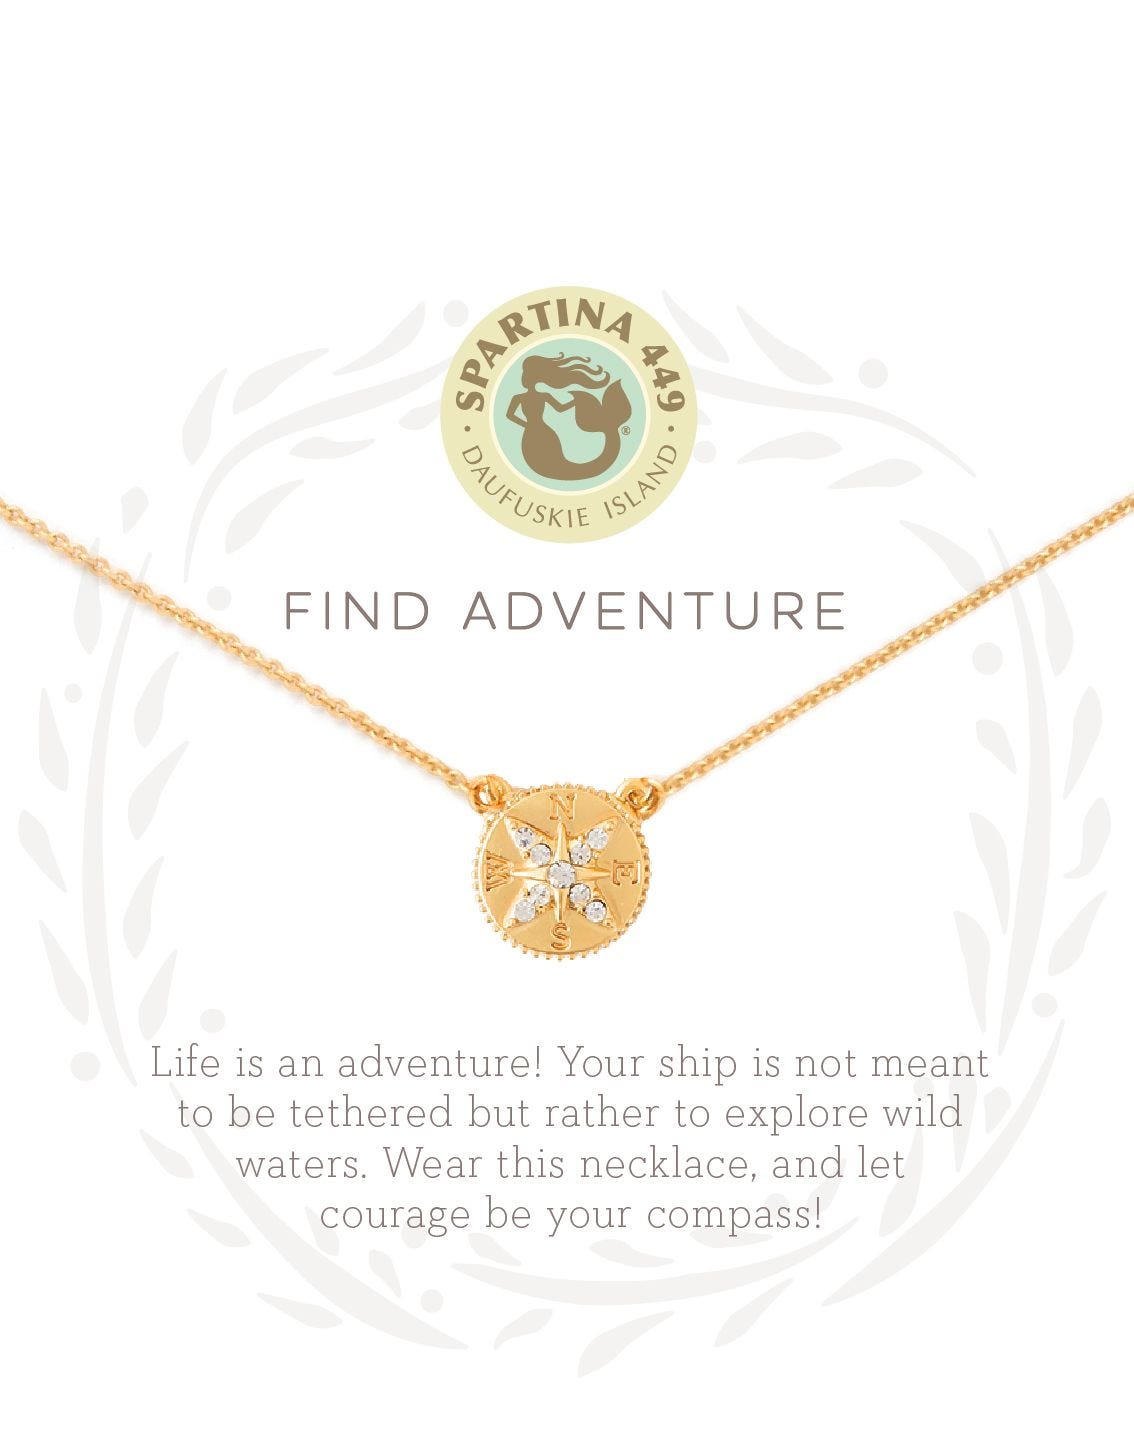 Sea La Vie Adventure Compass Necklace - Jewelry - SierraLily